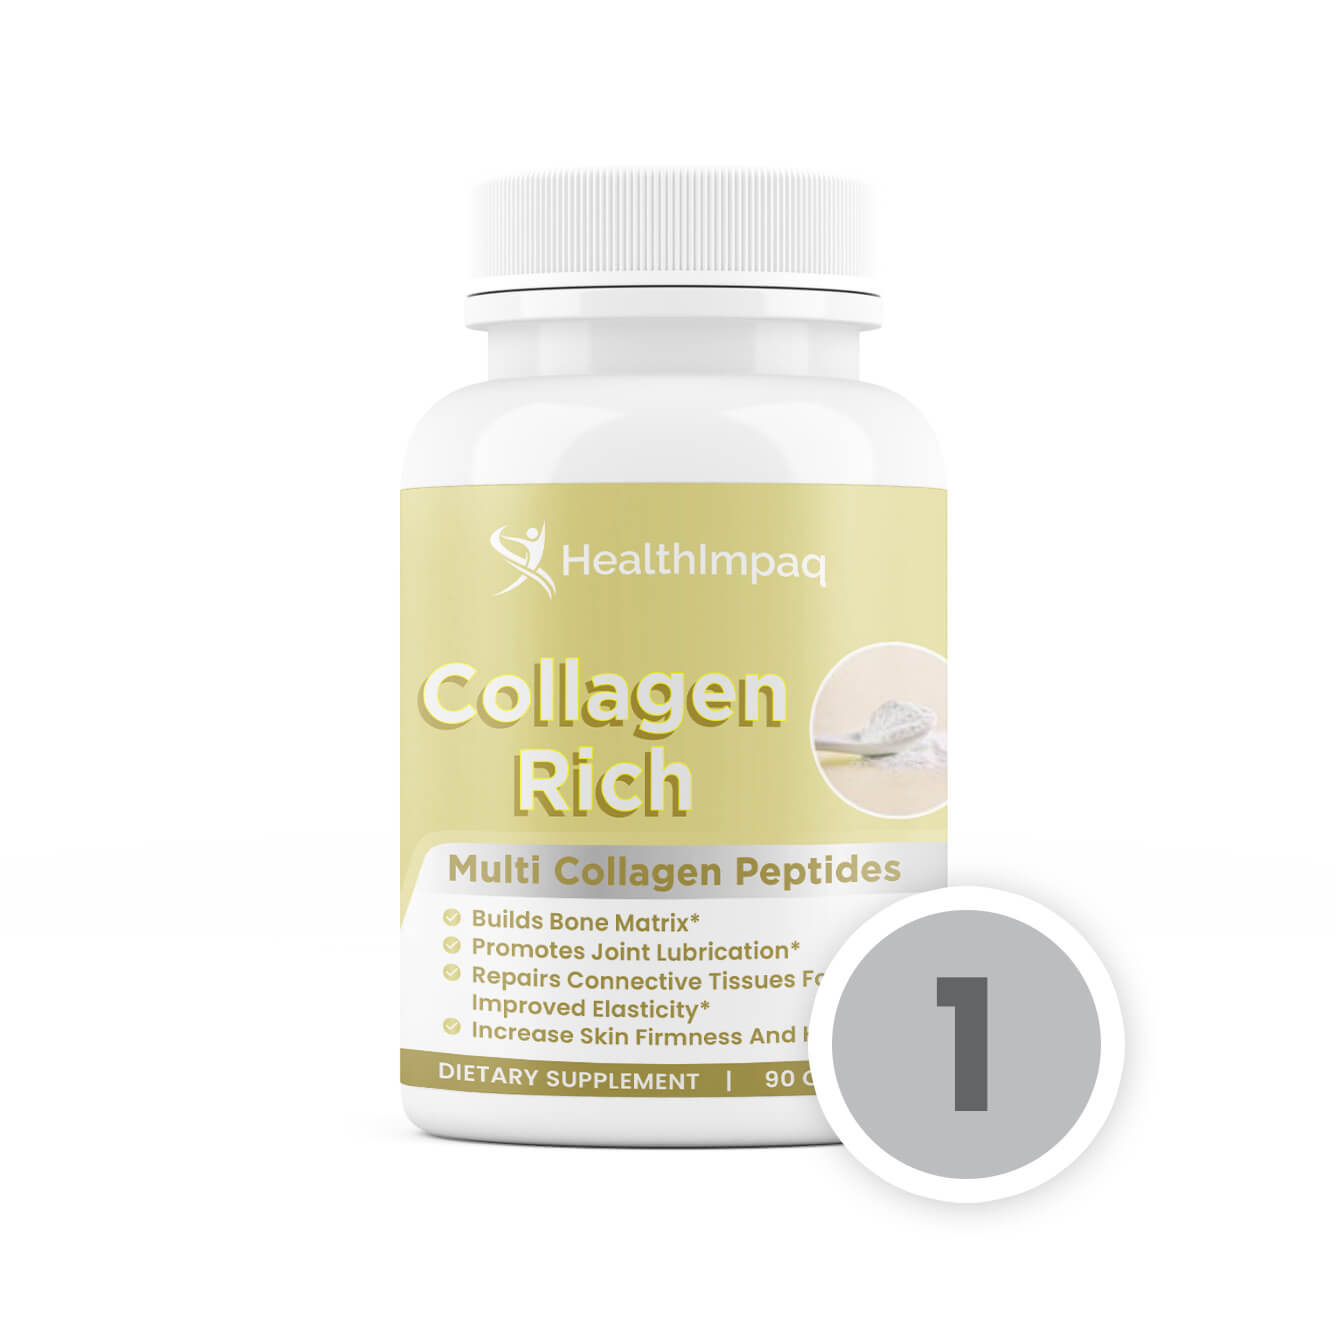 What Is The Best Collagen Supplement